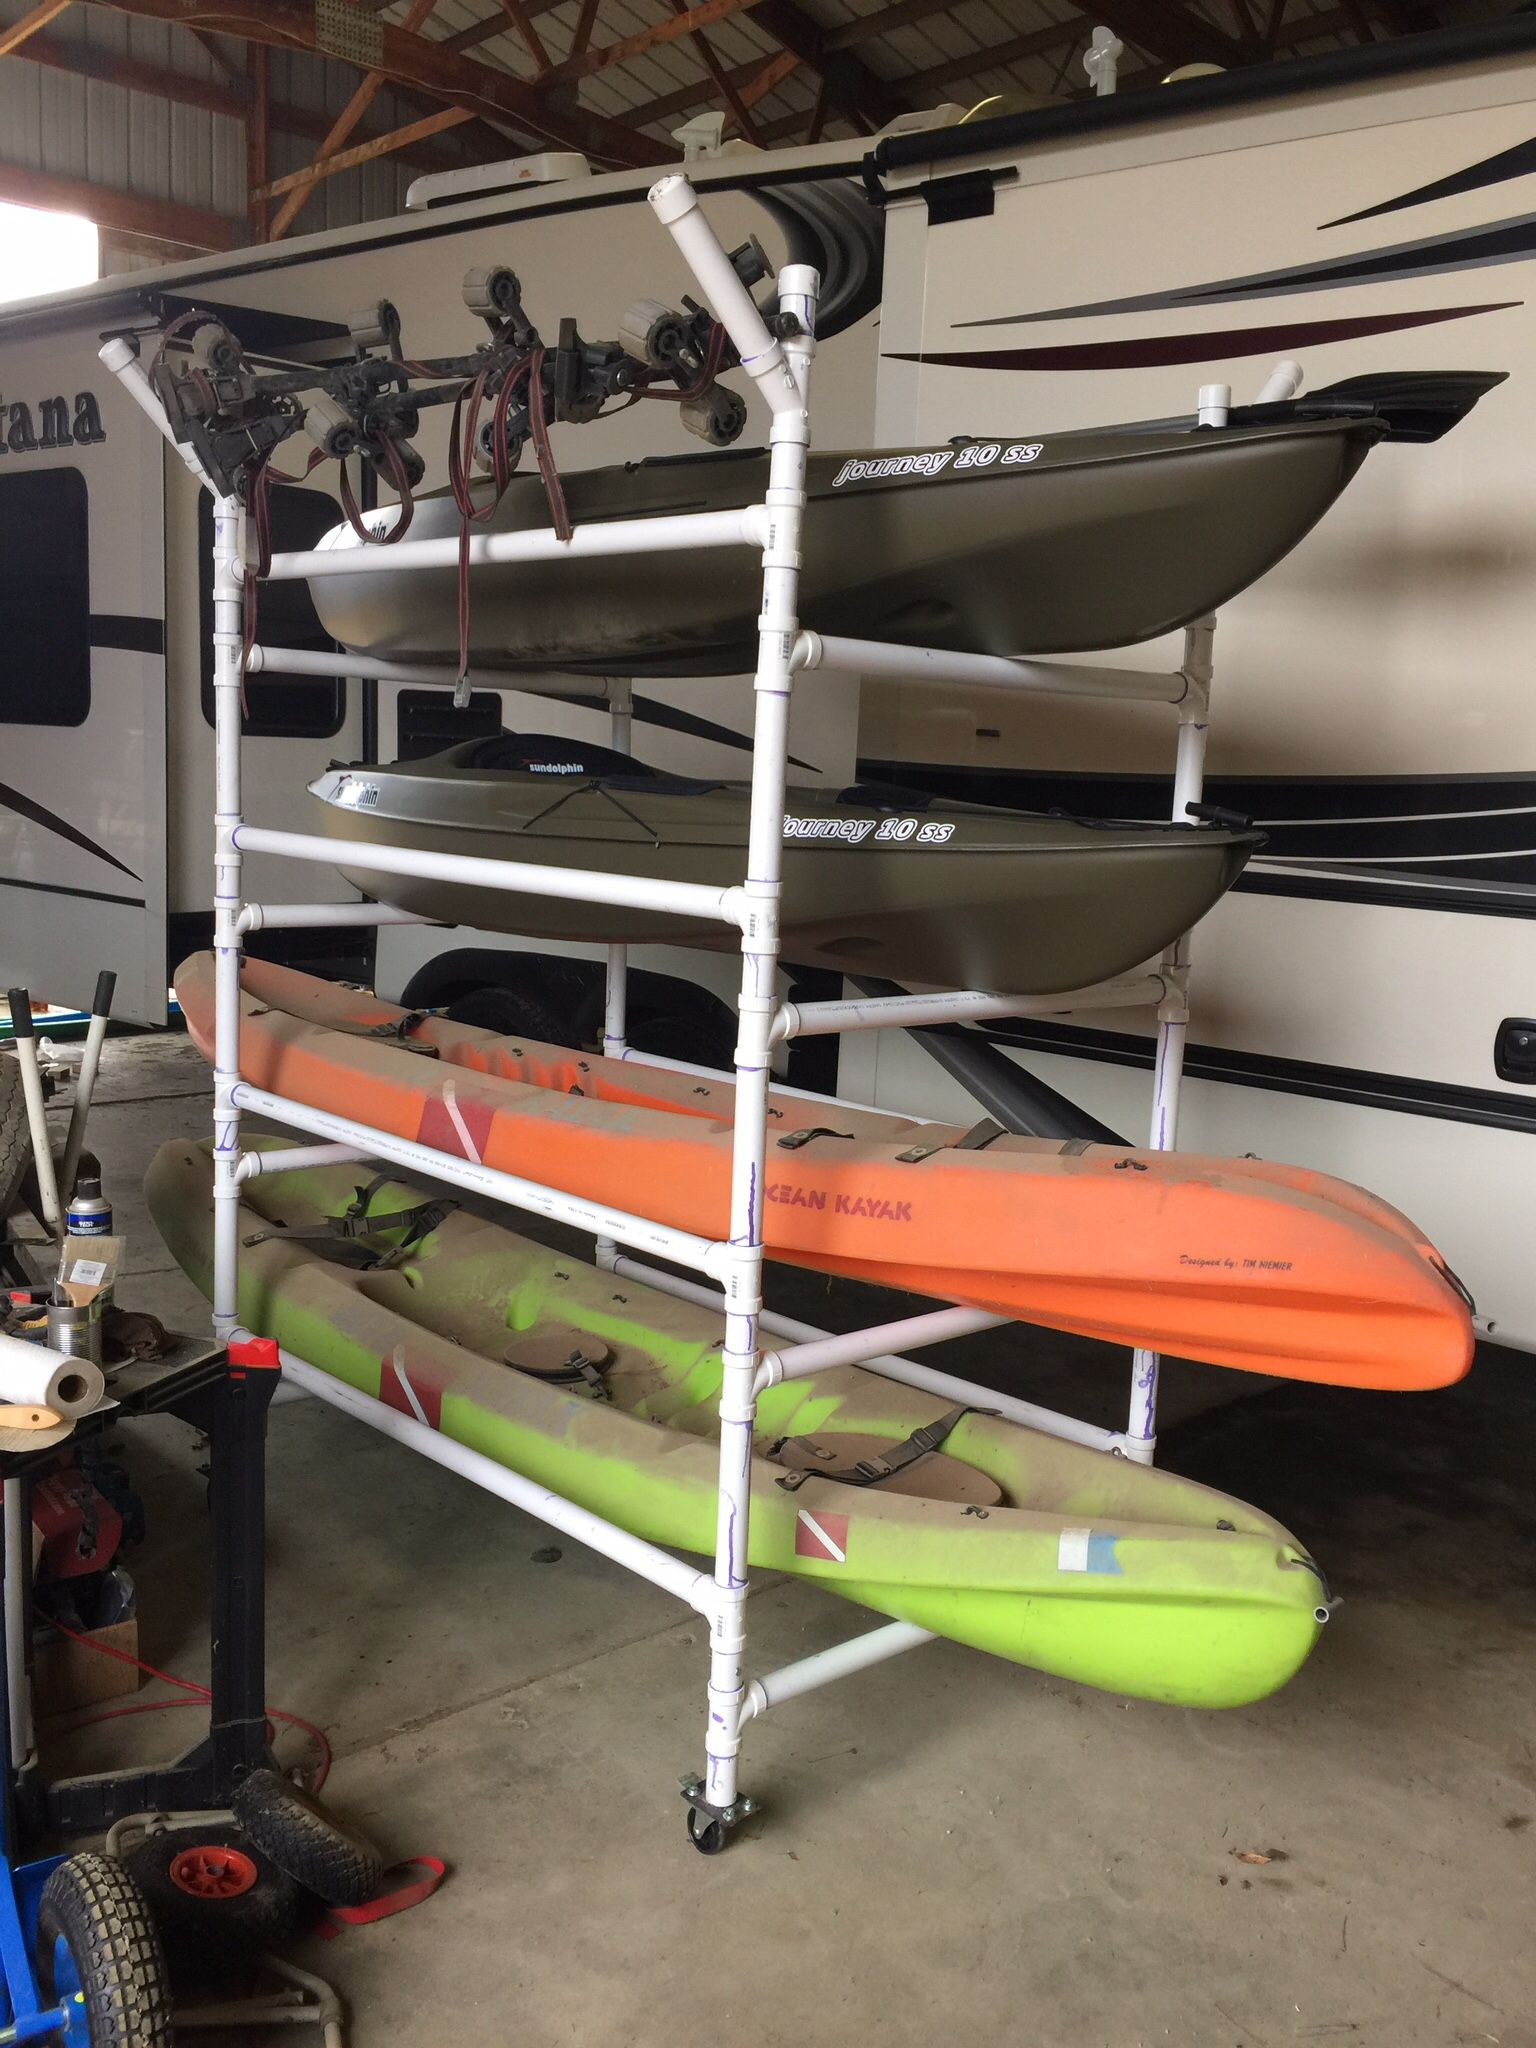 DIY Kayak Rack For Car
 Homemade PVC kayak rack can store 4 kayaks paddles